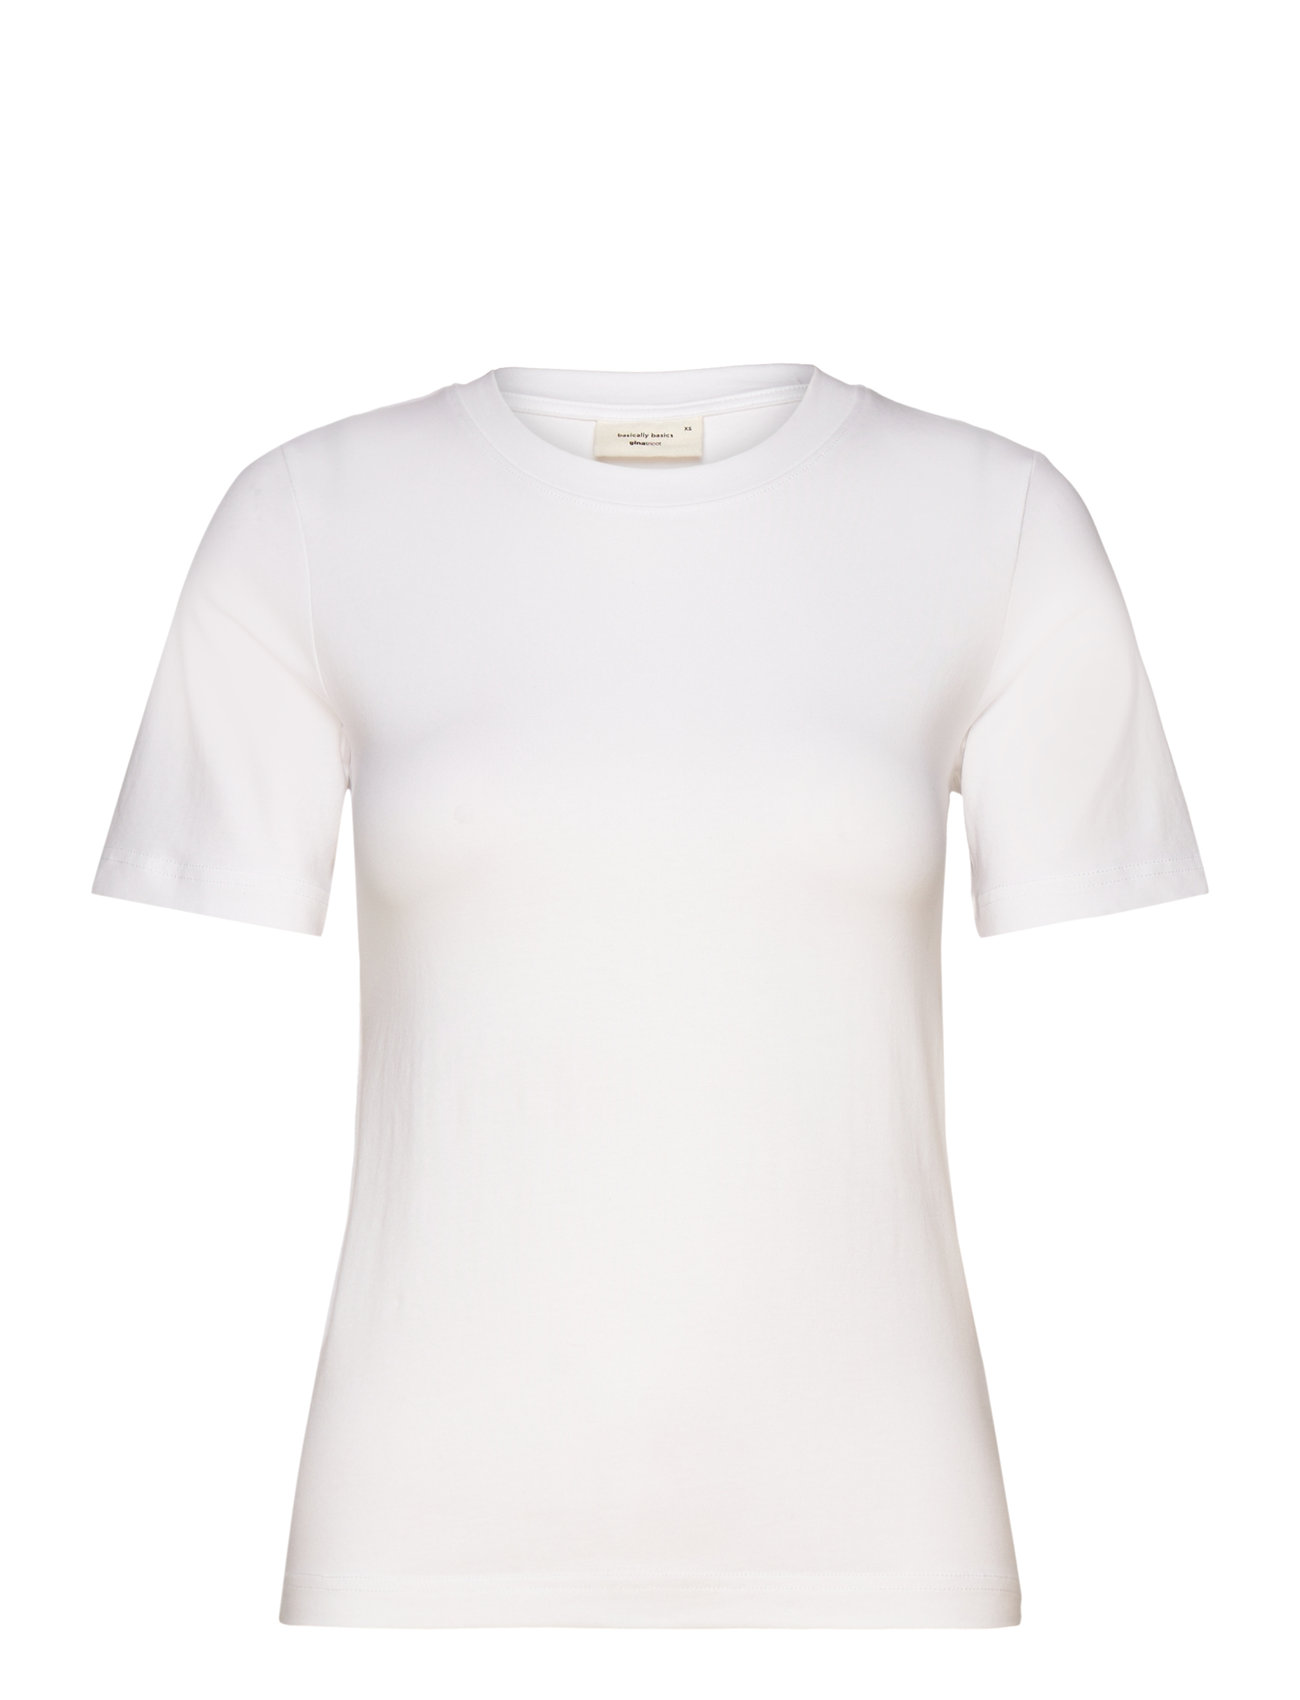 Basic Original Tee Tops T-shirts & Tops Short-sleeved White Gina Tricot